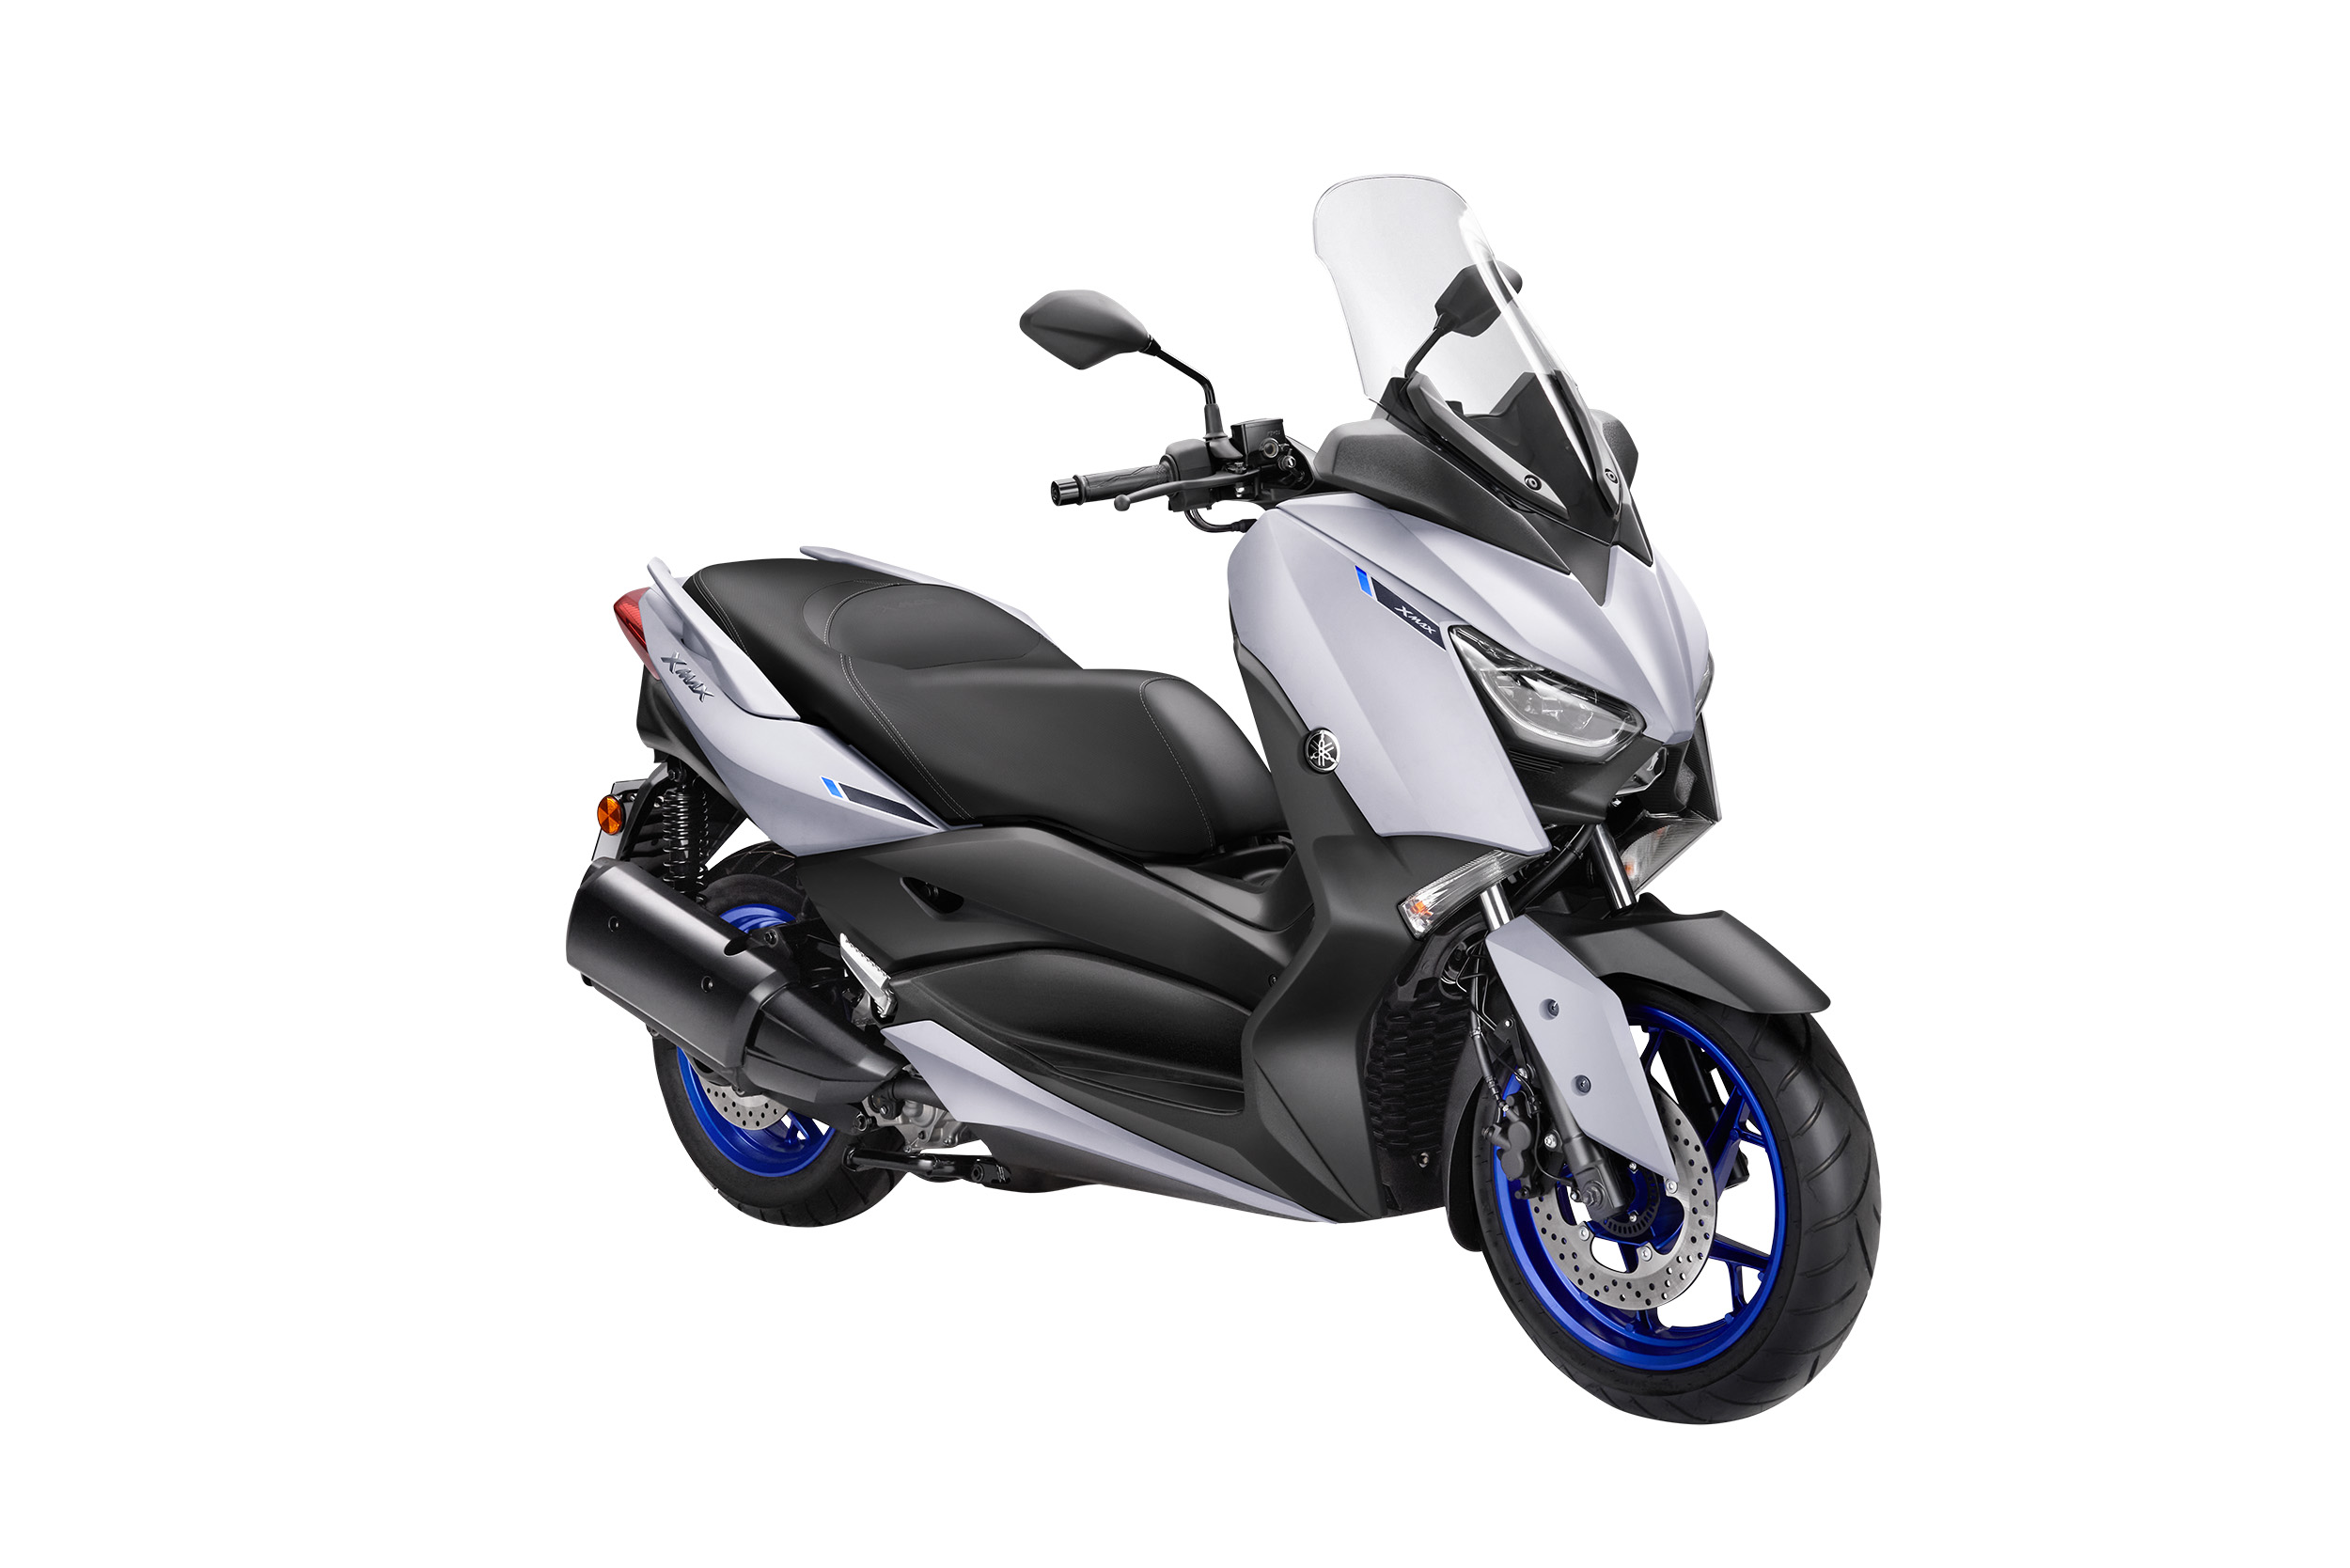 2022 Yamaha X-Max price Malaysia